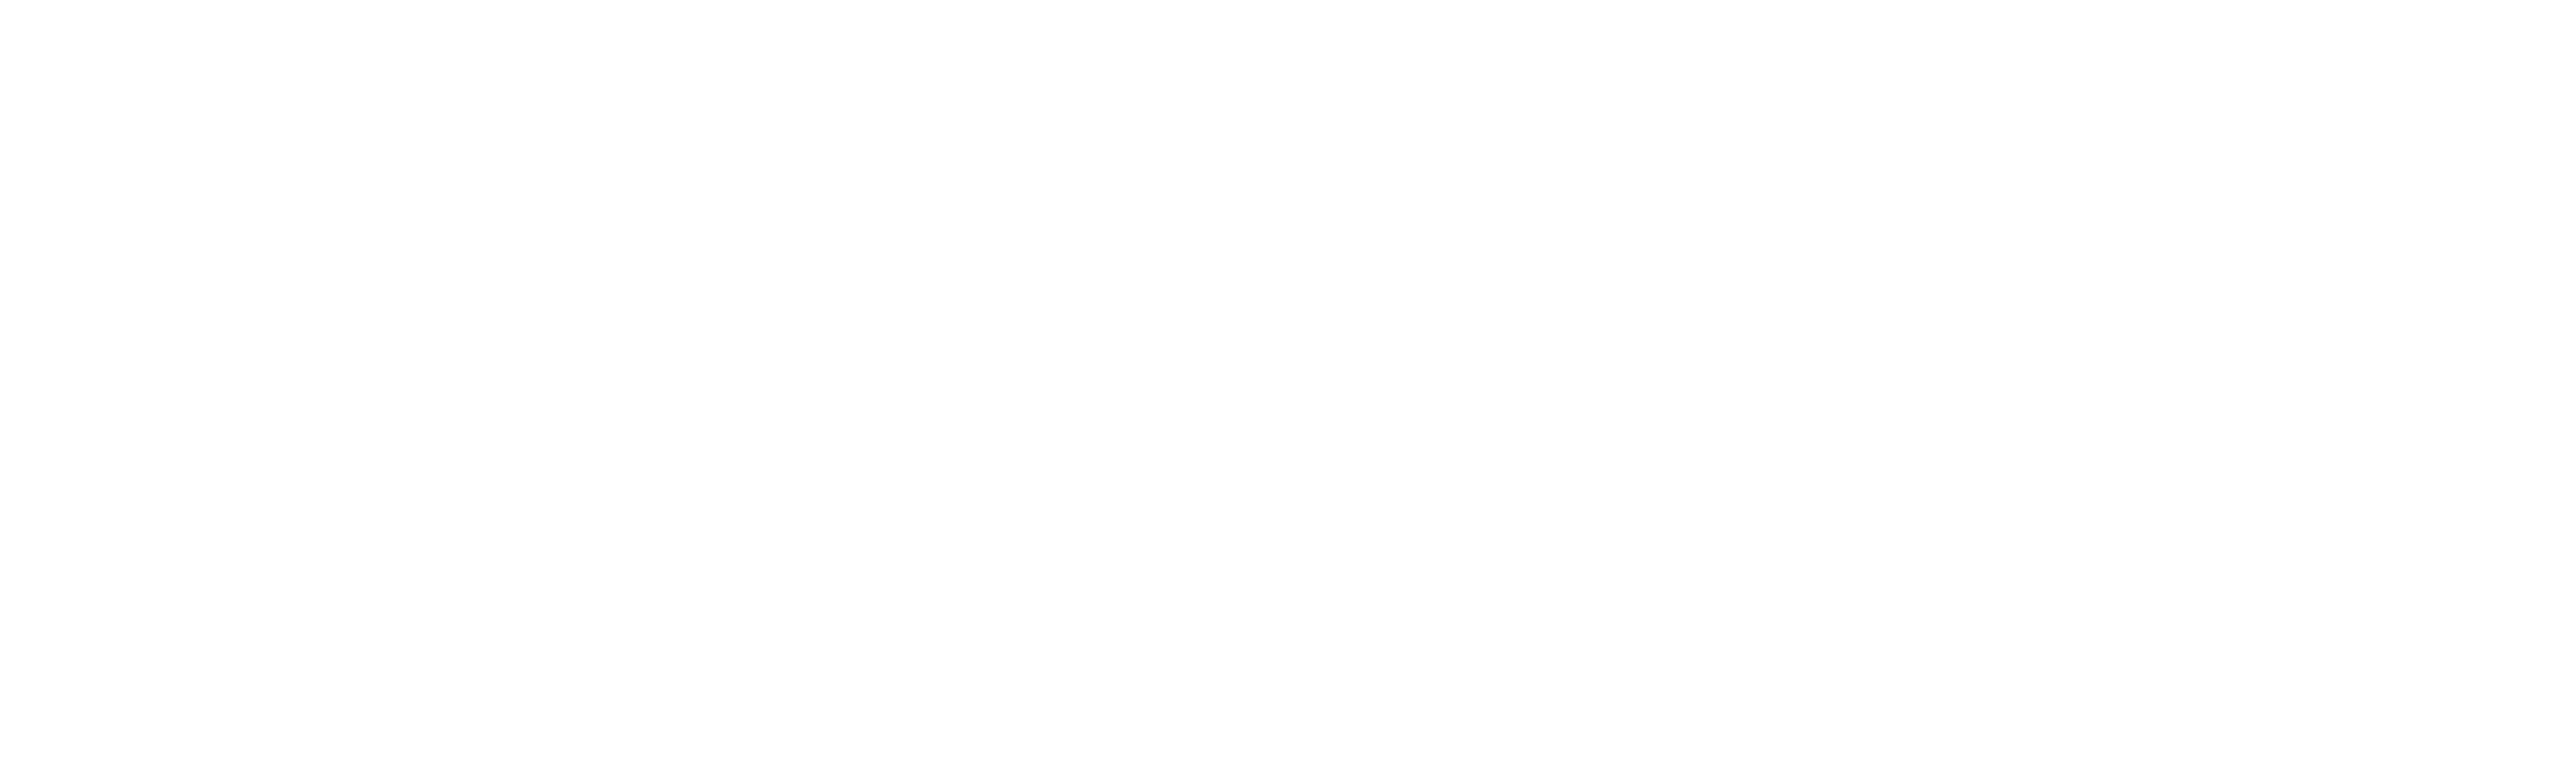 logo hd blanc transparent R MKL Group